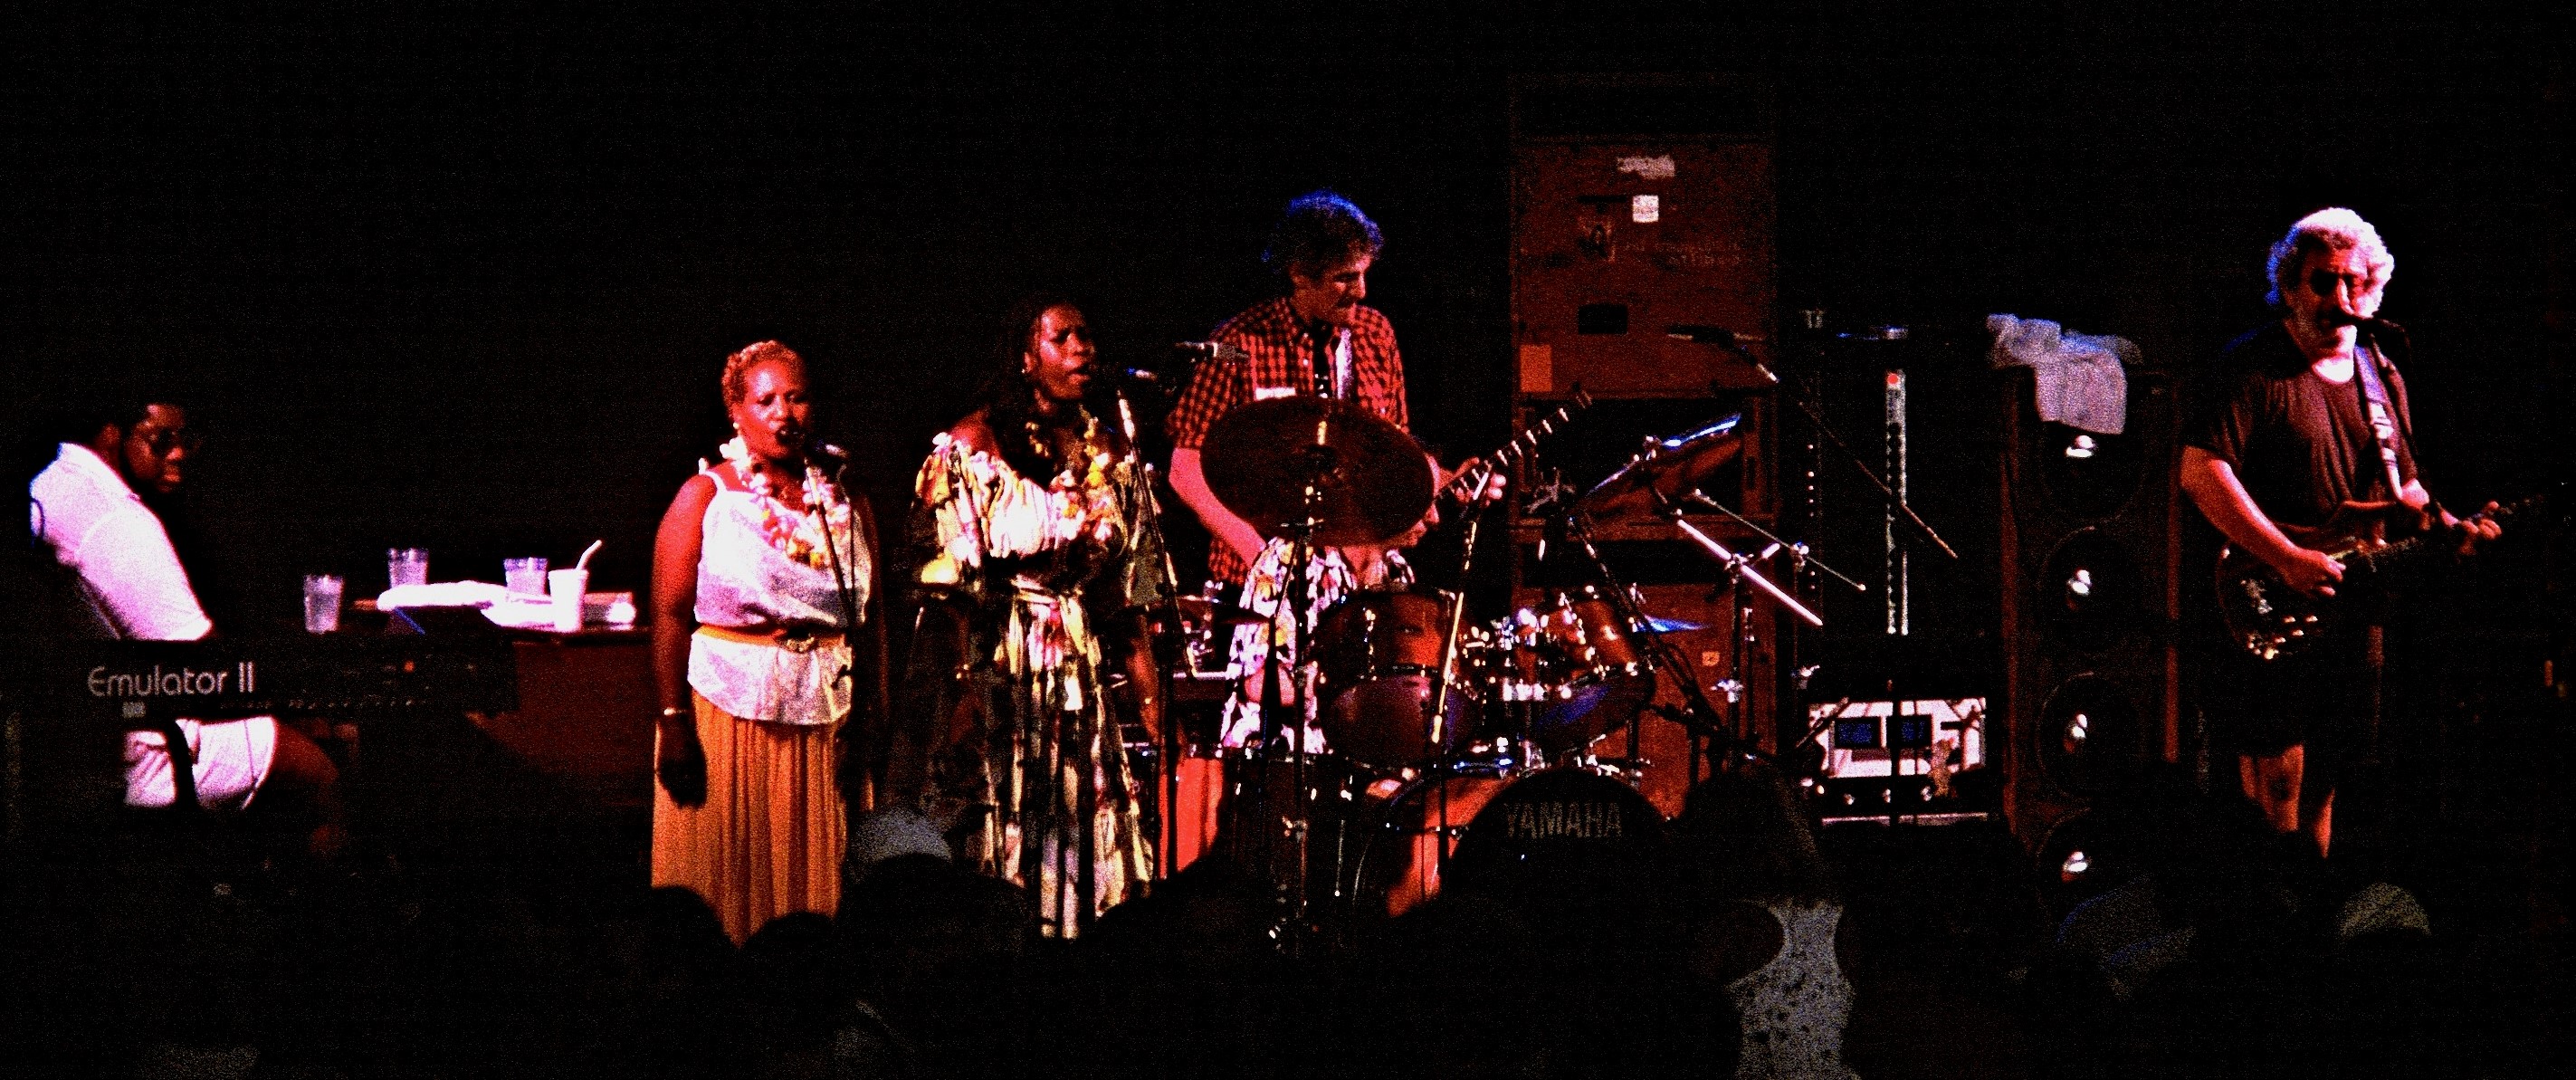 Jerry Garcia Band | Hilo, Hawaii | 5/20/90 | photo by Bill Smythe